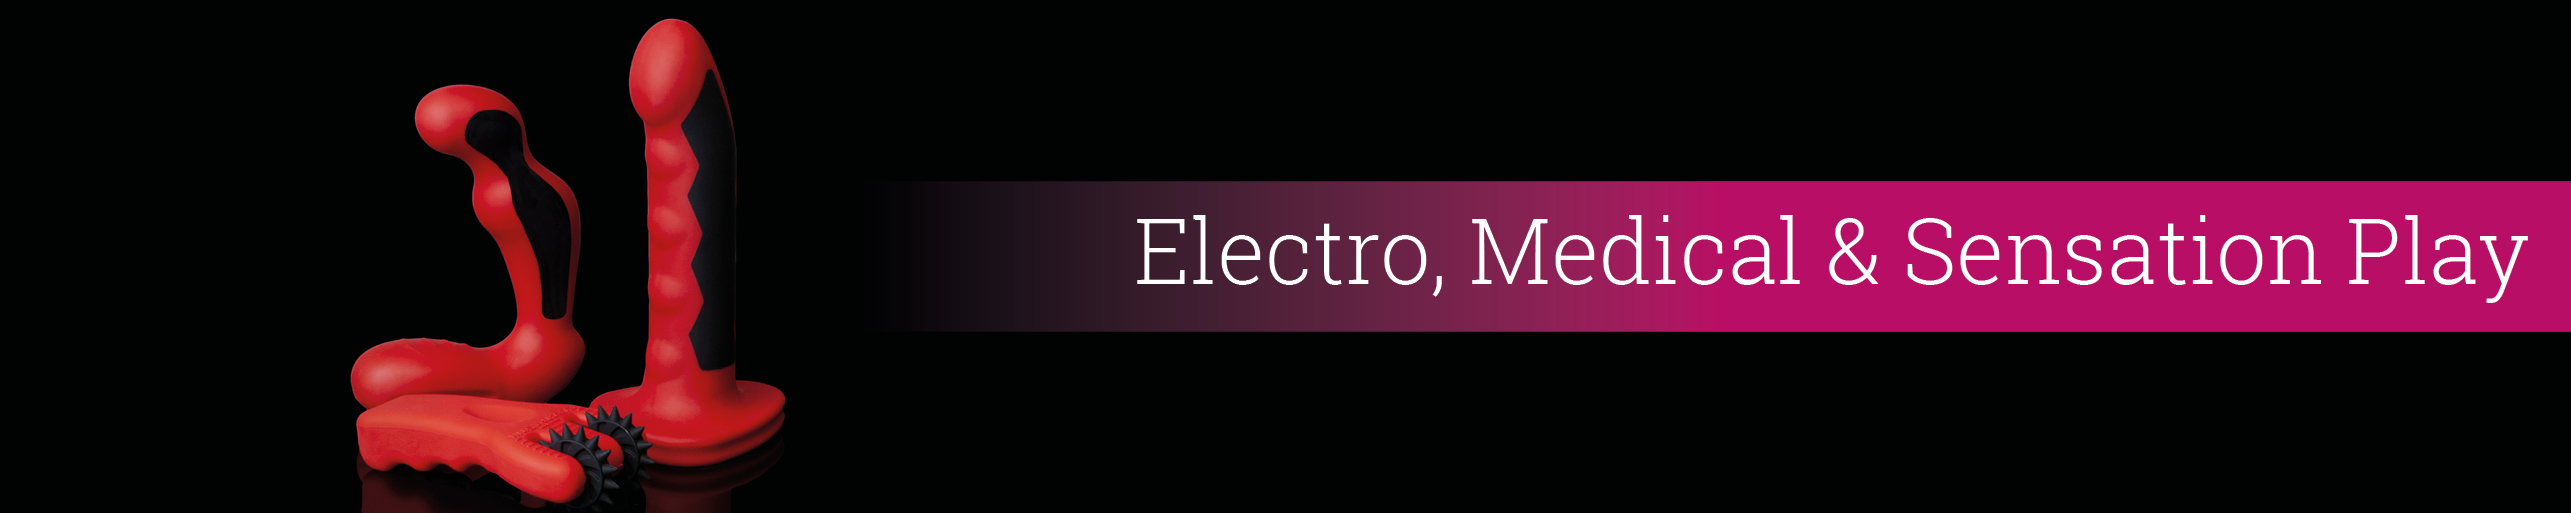 Electro, Medical & Sensation Play